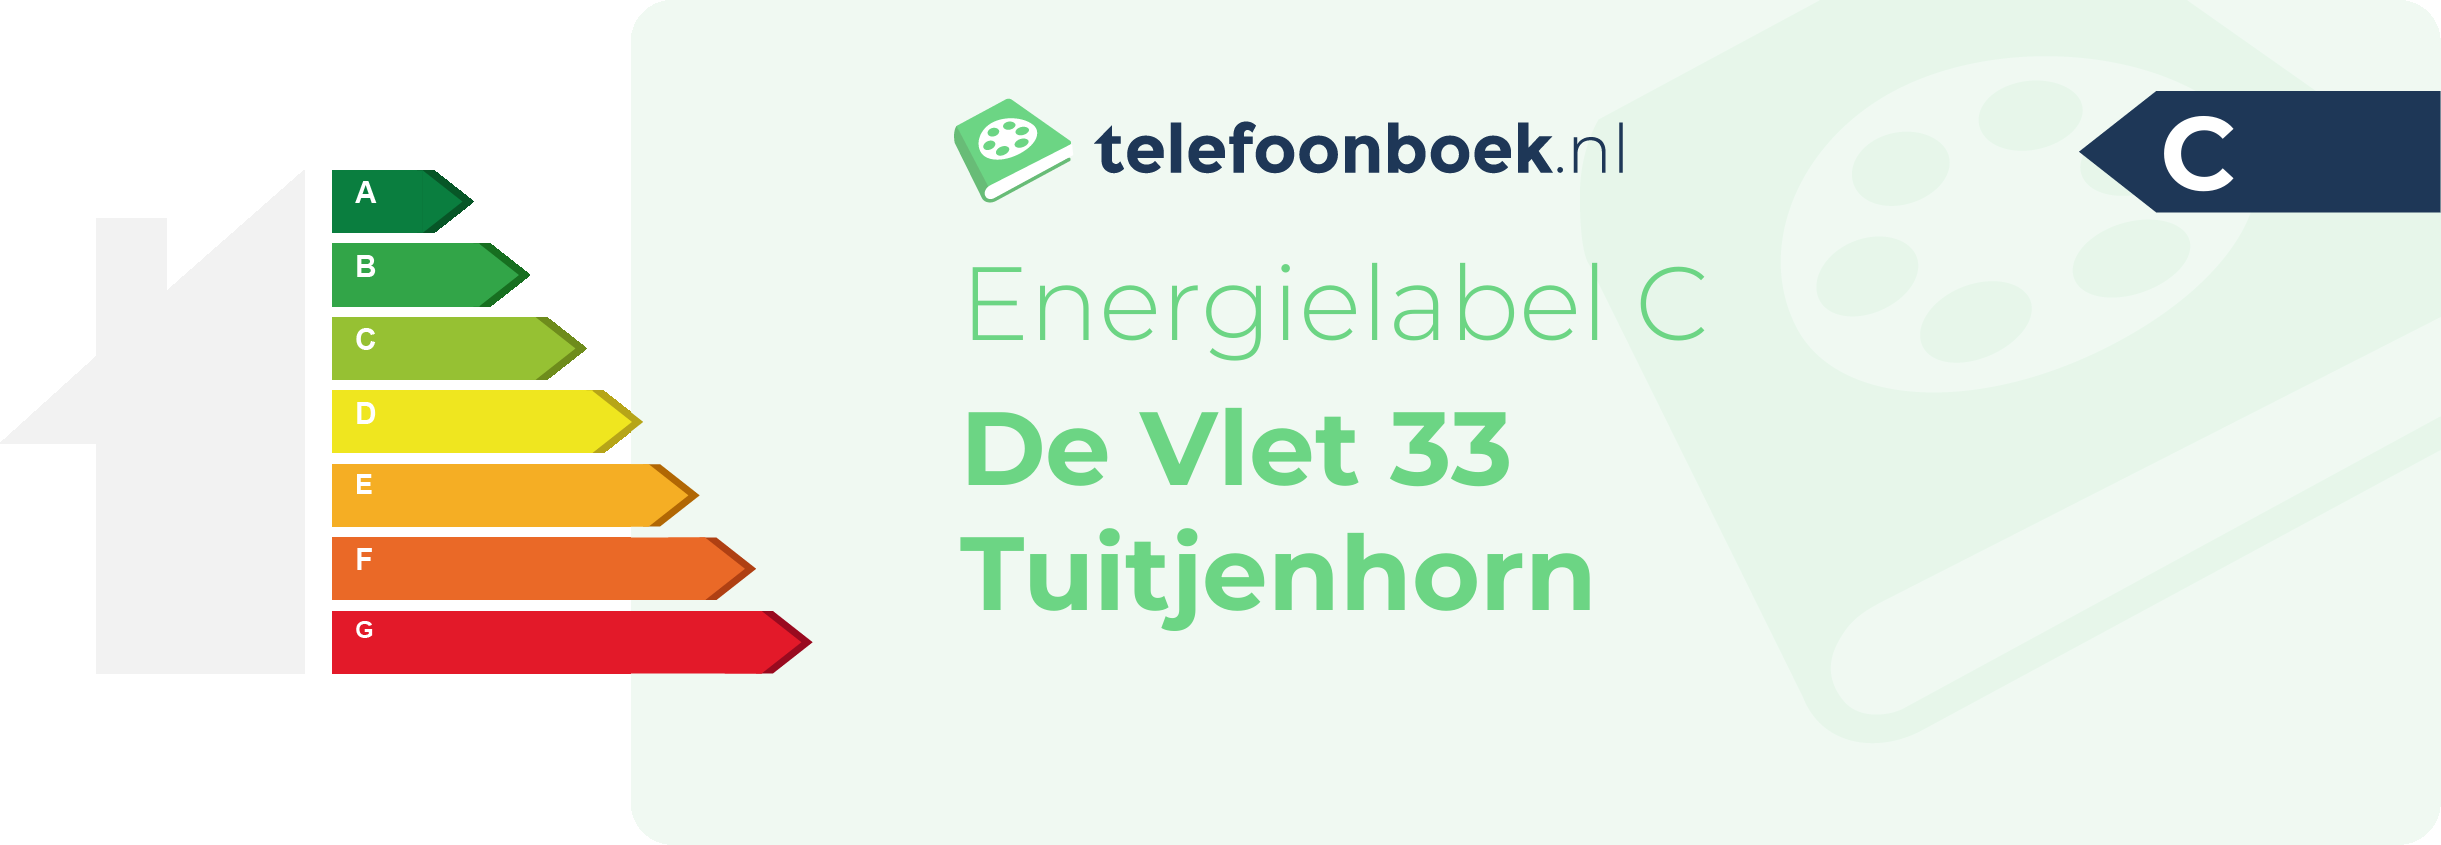 Energielabel De Vlet 33 Tuitjenhorn